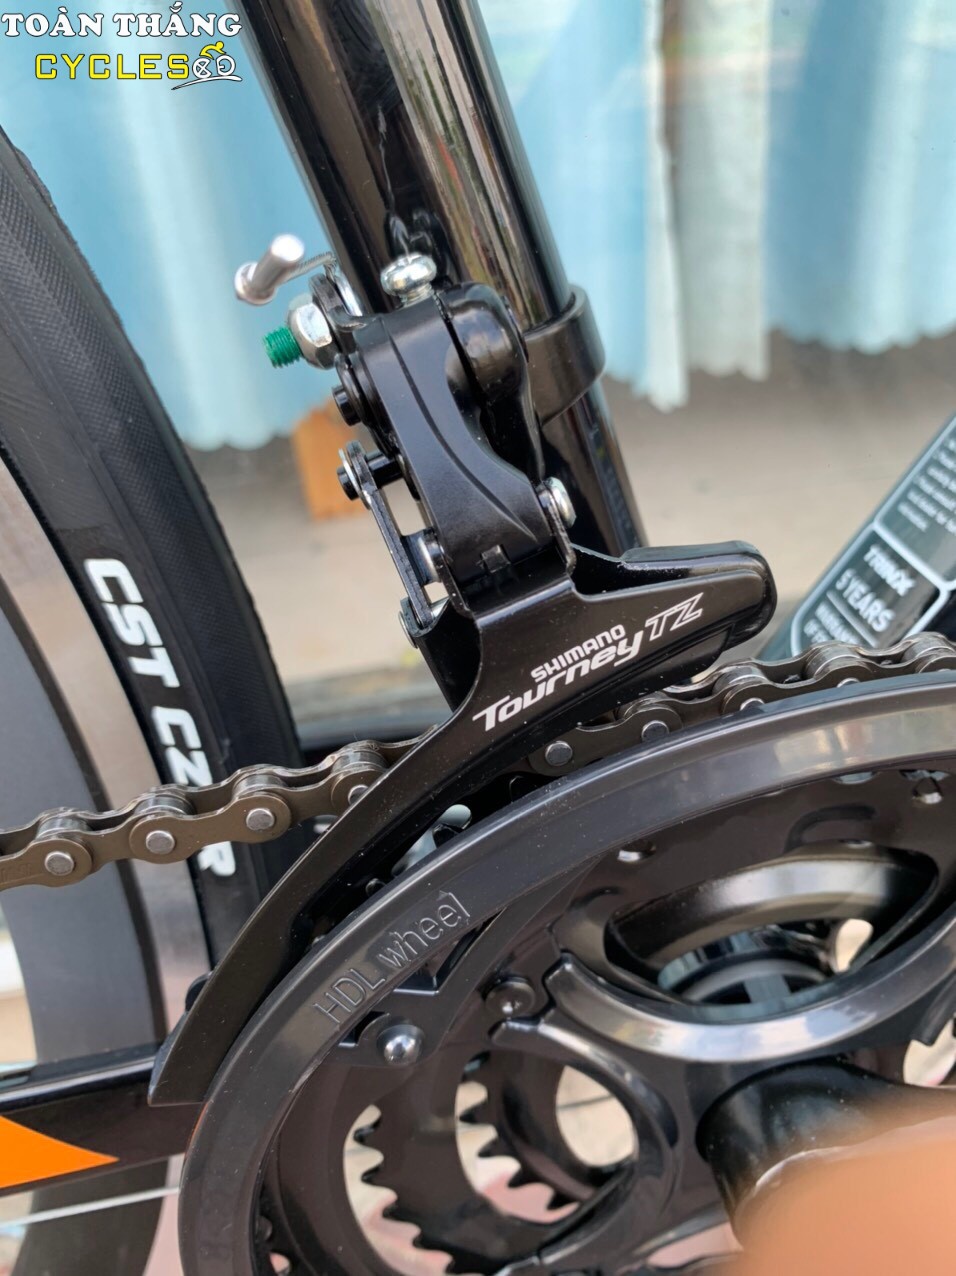 Xe đạp đua TRINX TEMPO1.0 2020 Đen cam